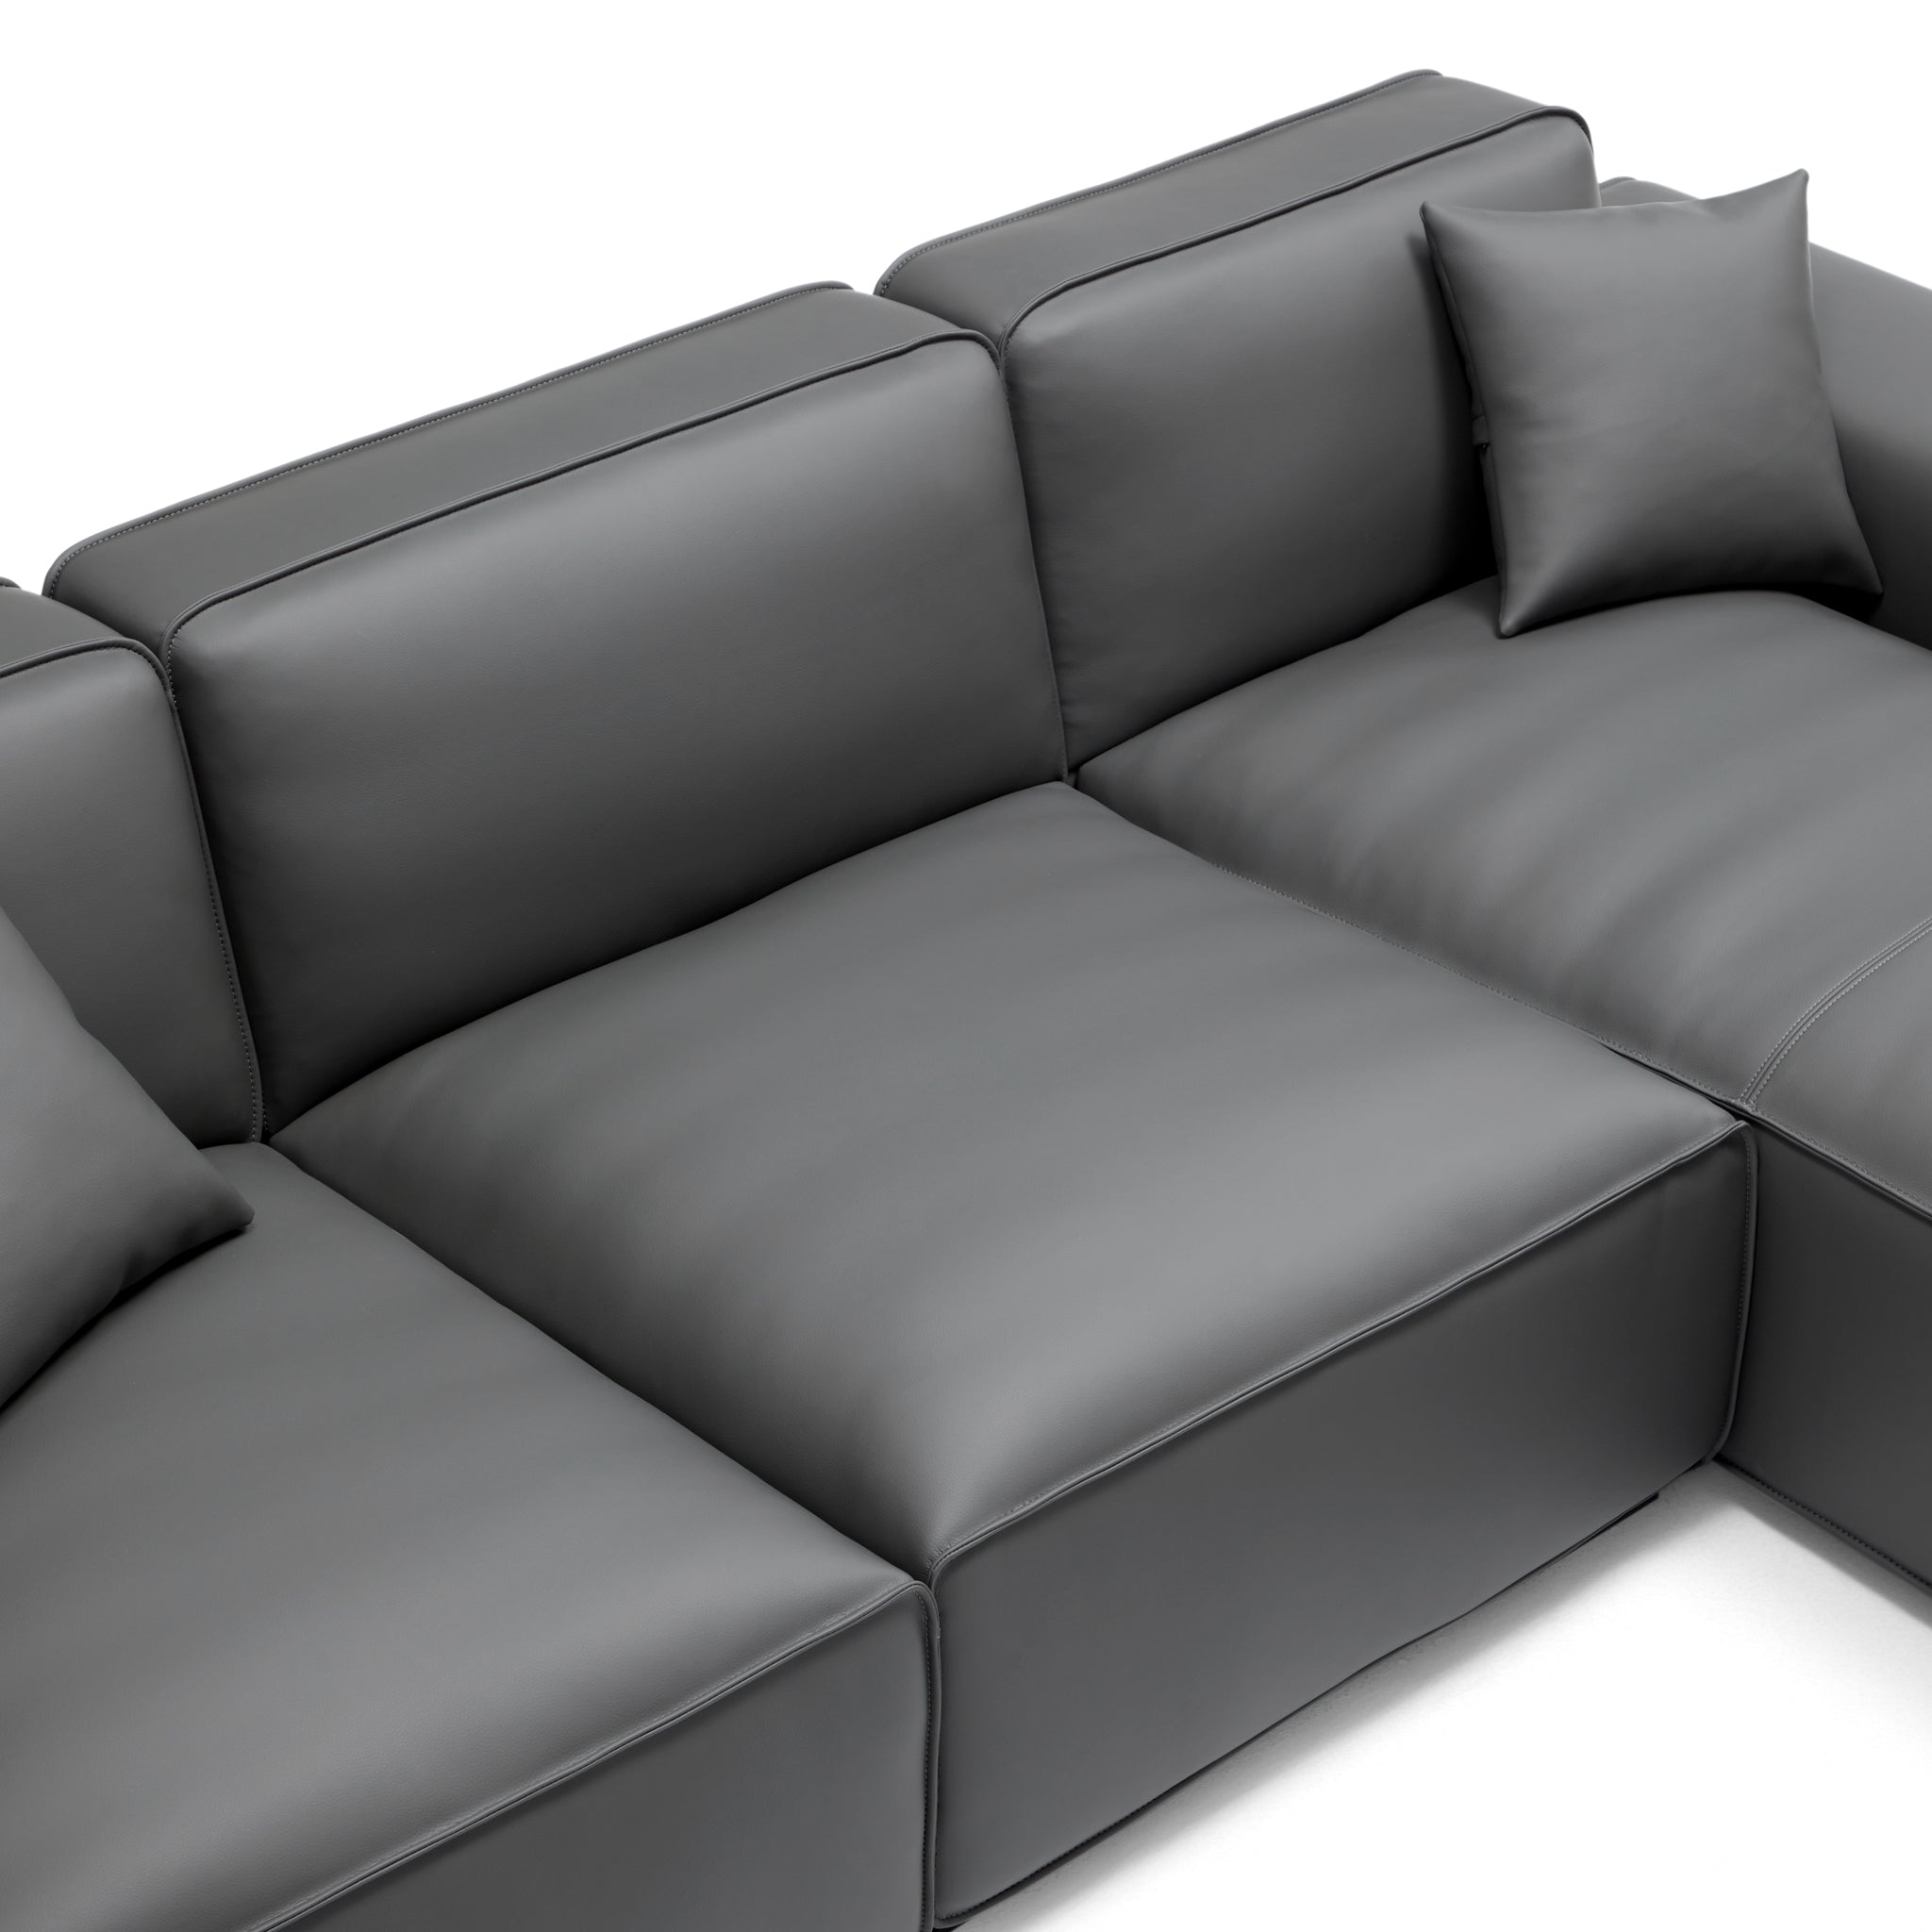 Domus Modular Dark Gray Leather U-Shaped Sectional Sofa